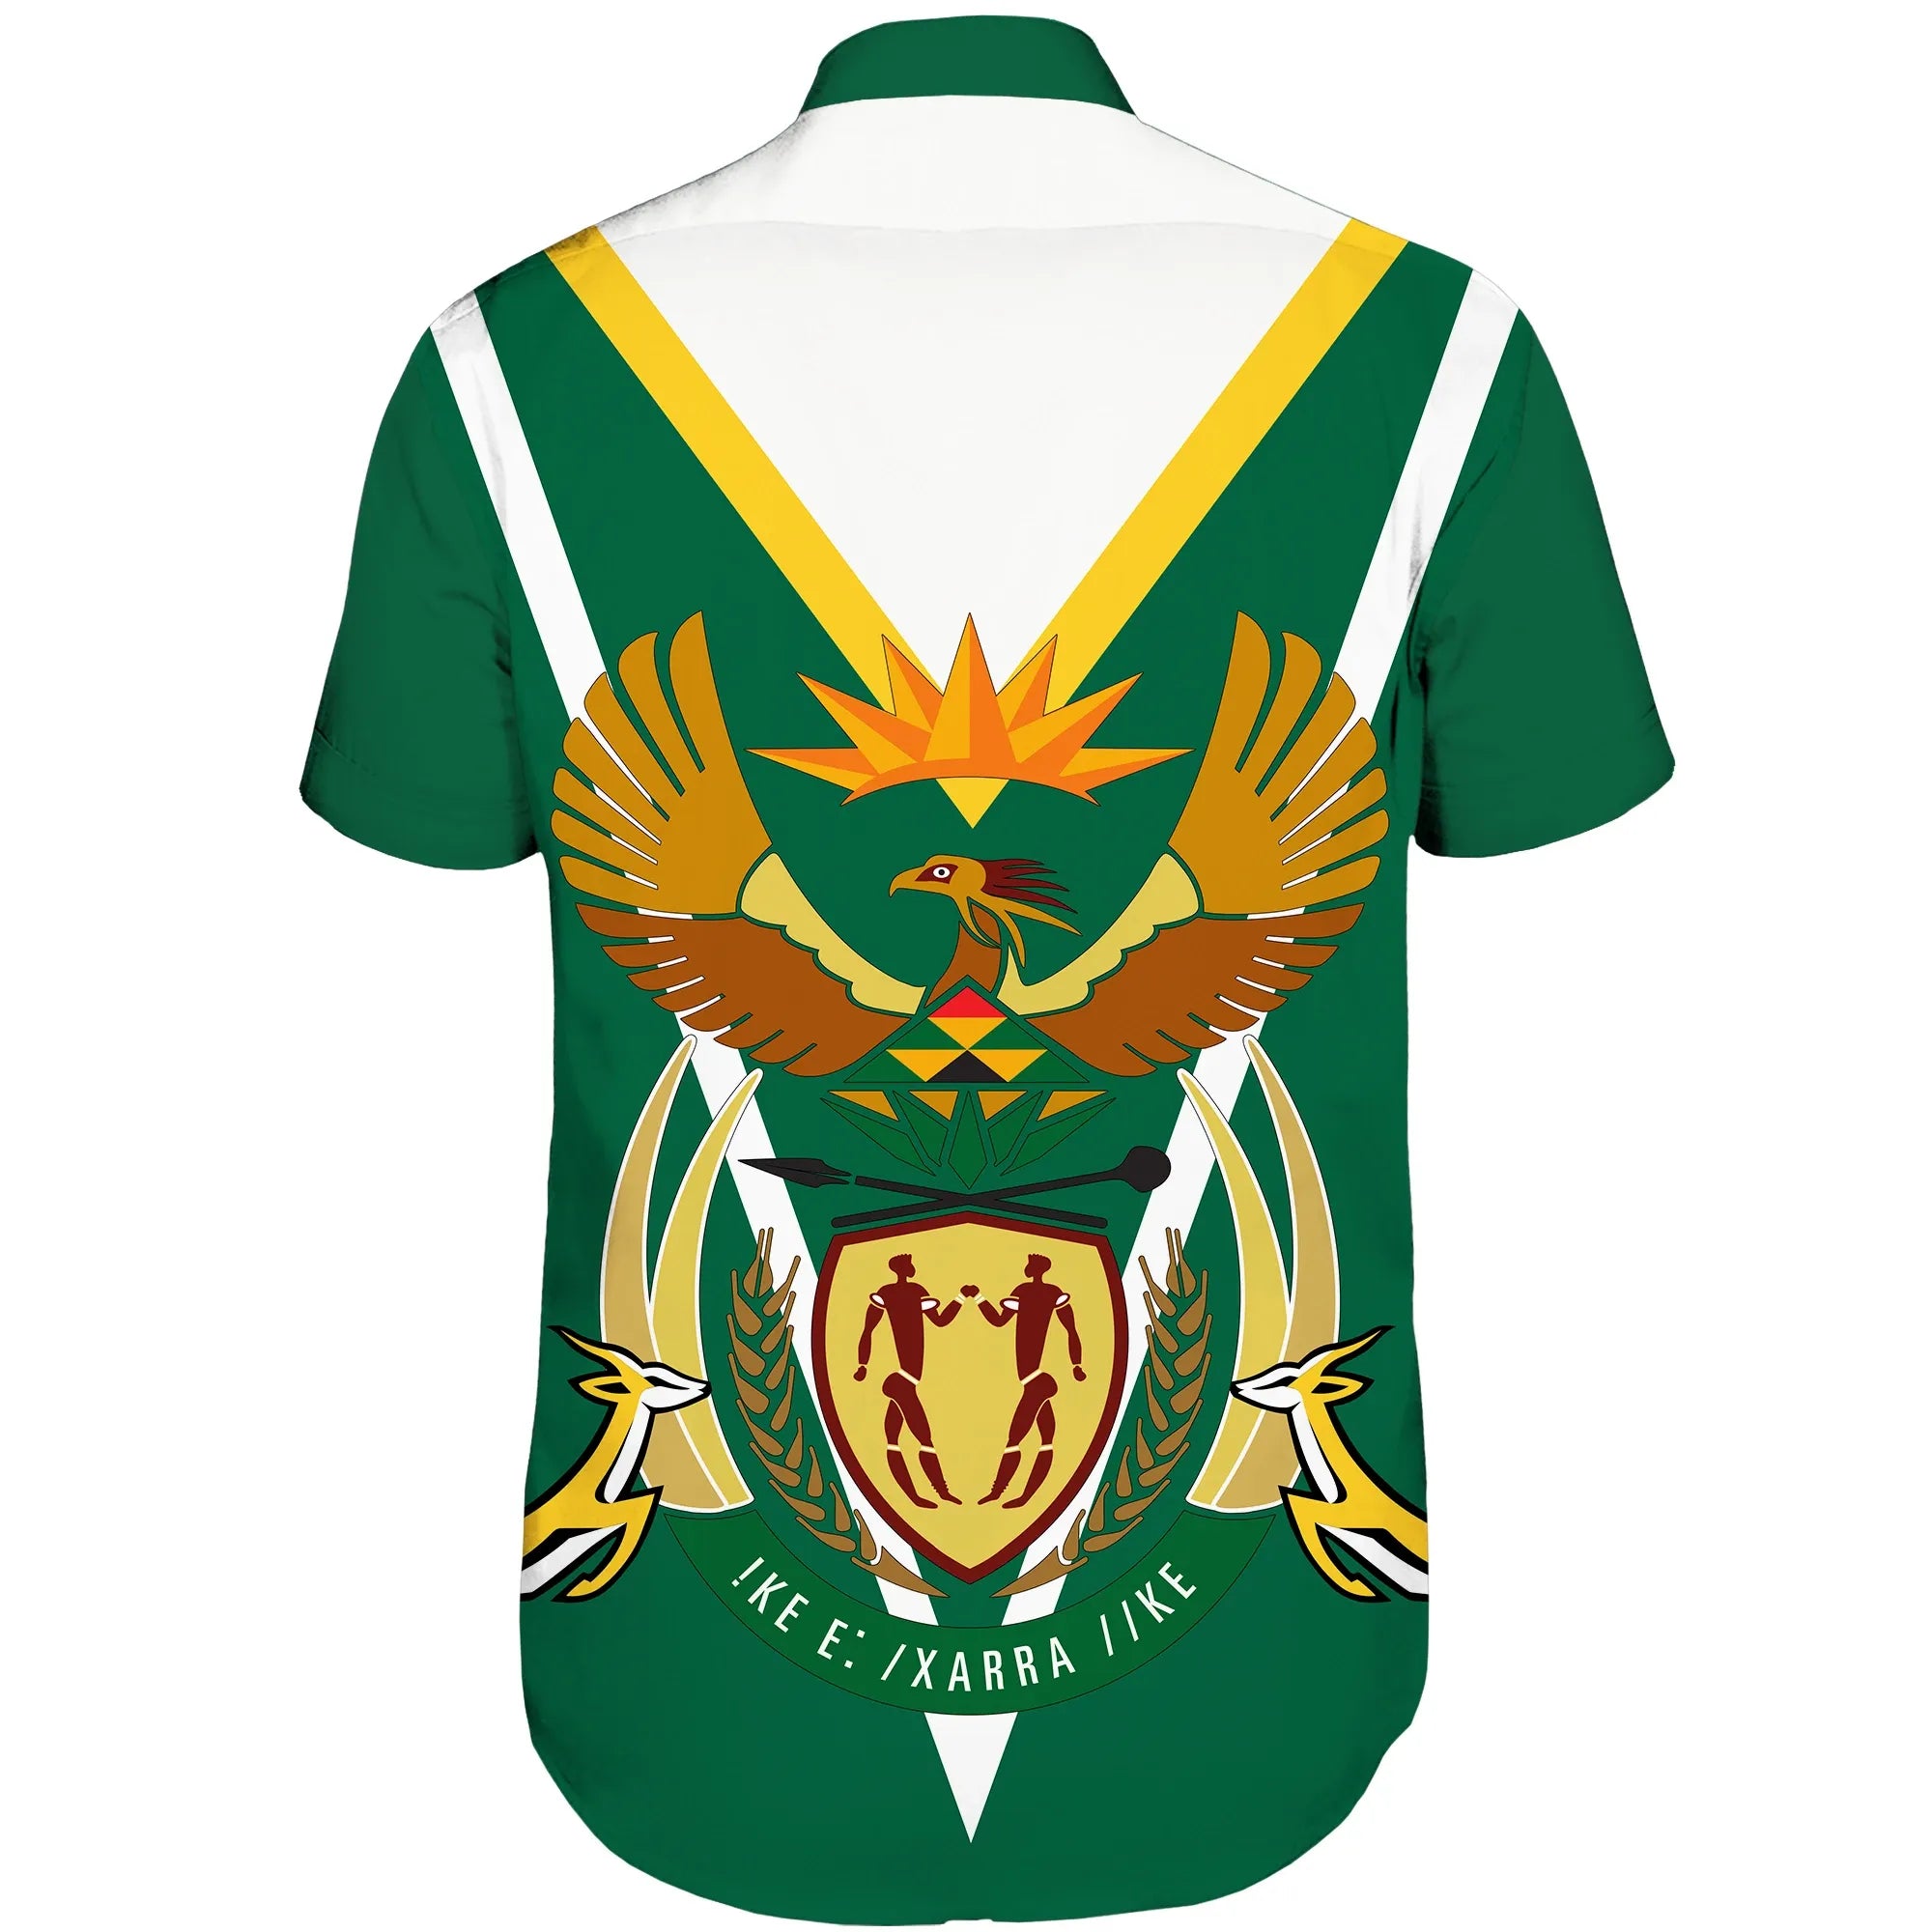 South Africa Short Sleeve Shirt - Coat Of Arms Short Sleeve Shirt